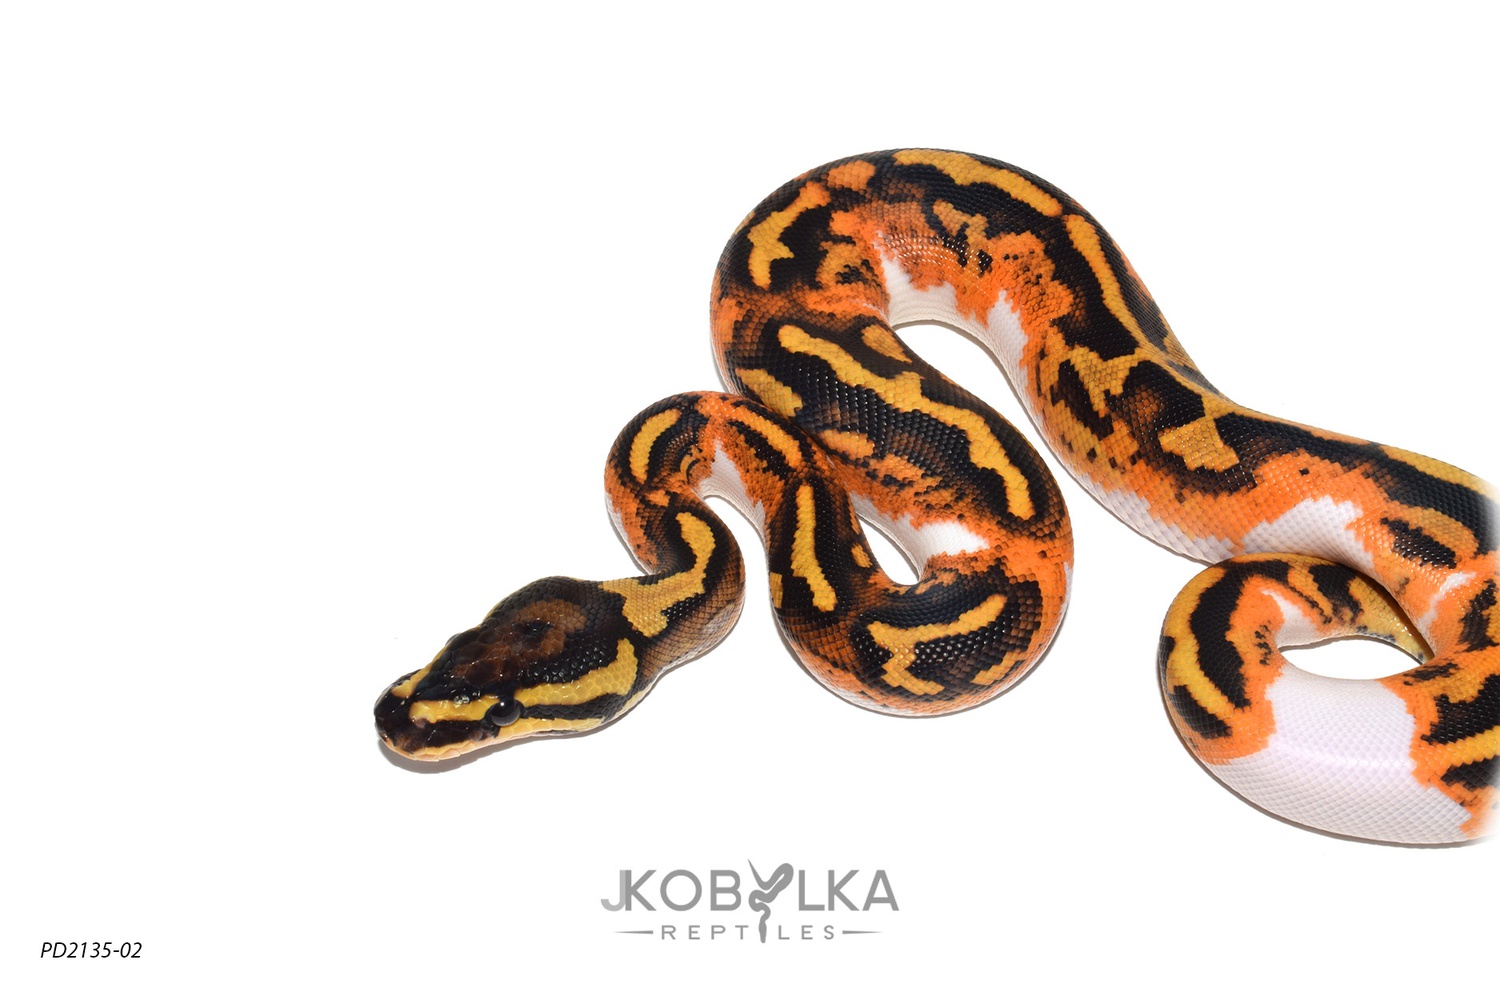 Yellowbelly GeneX Piebald Ball Python by J. Kobylka Reptiles